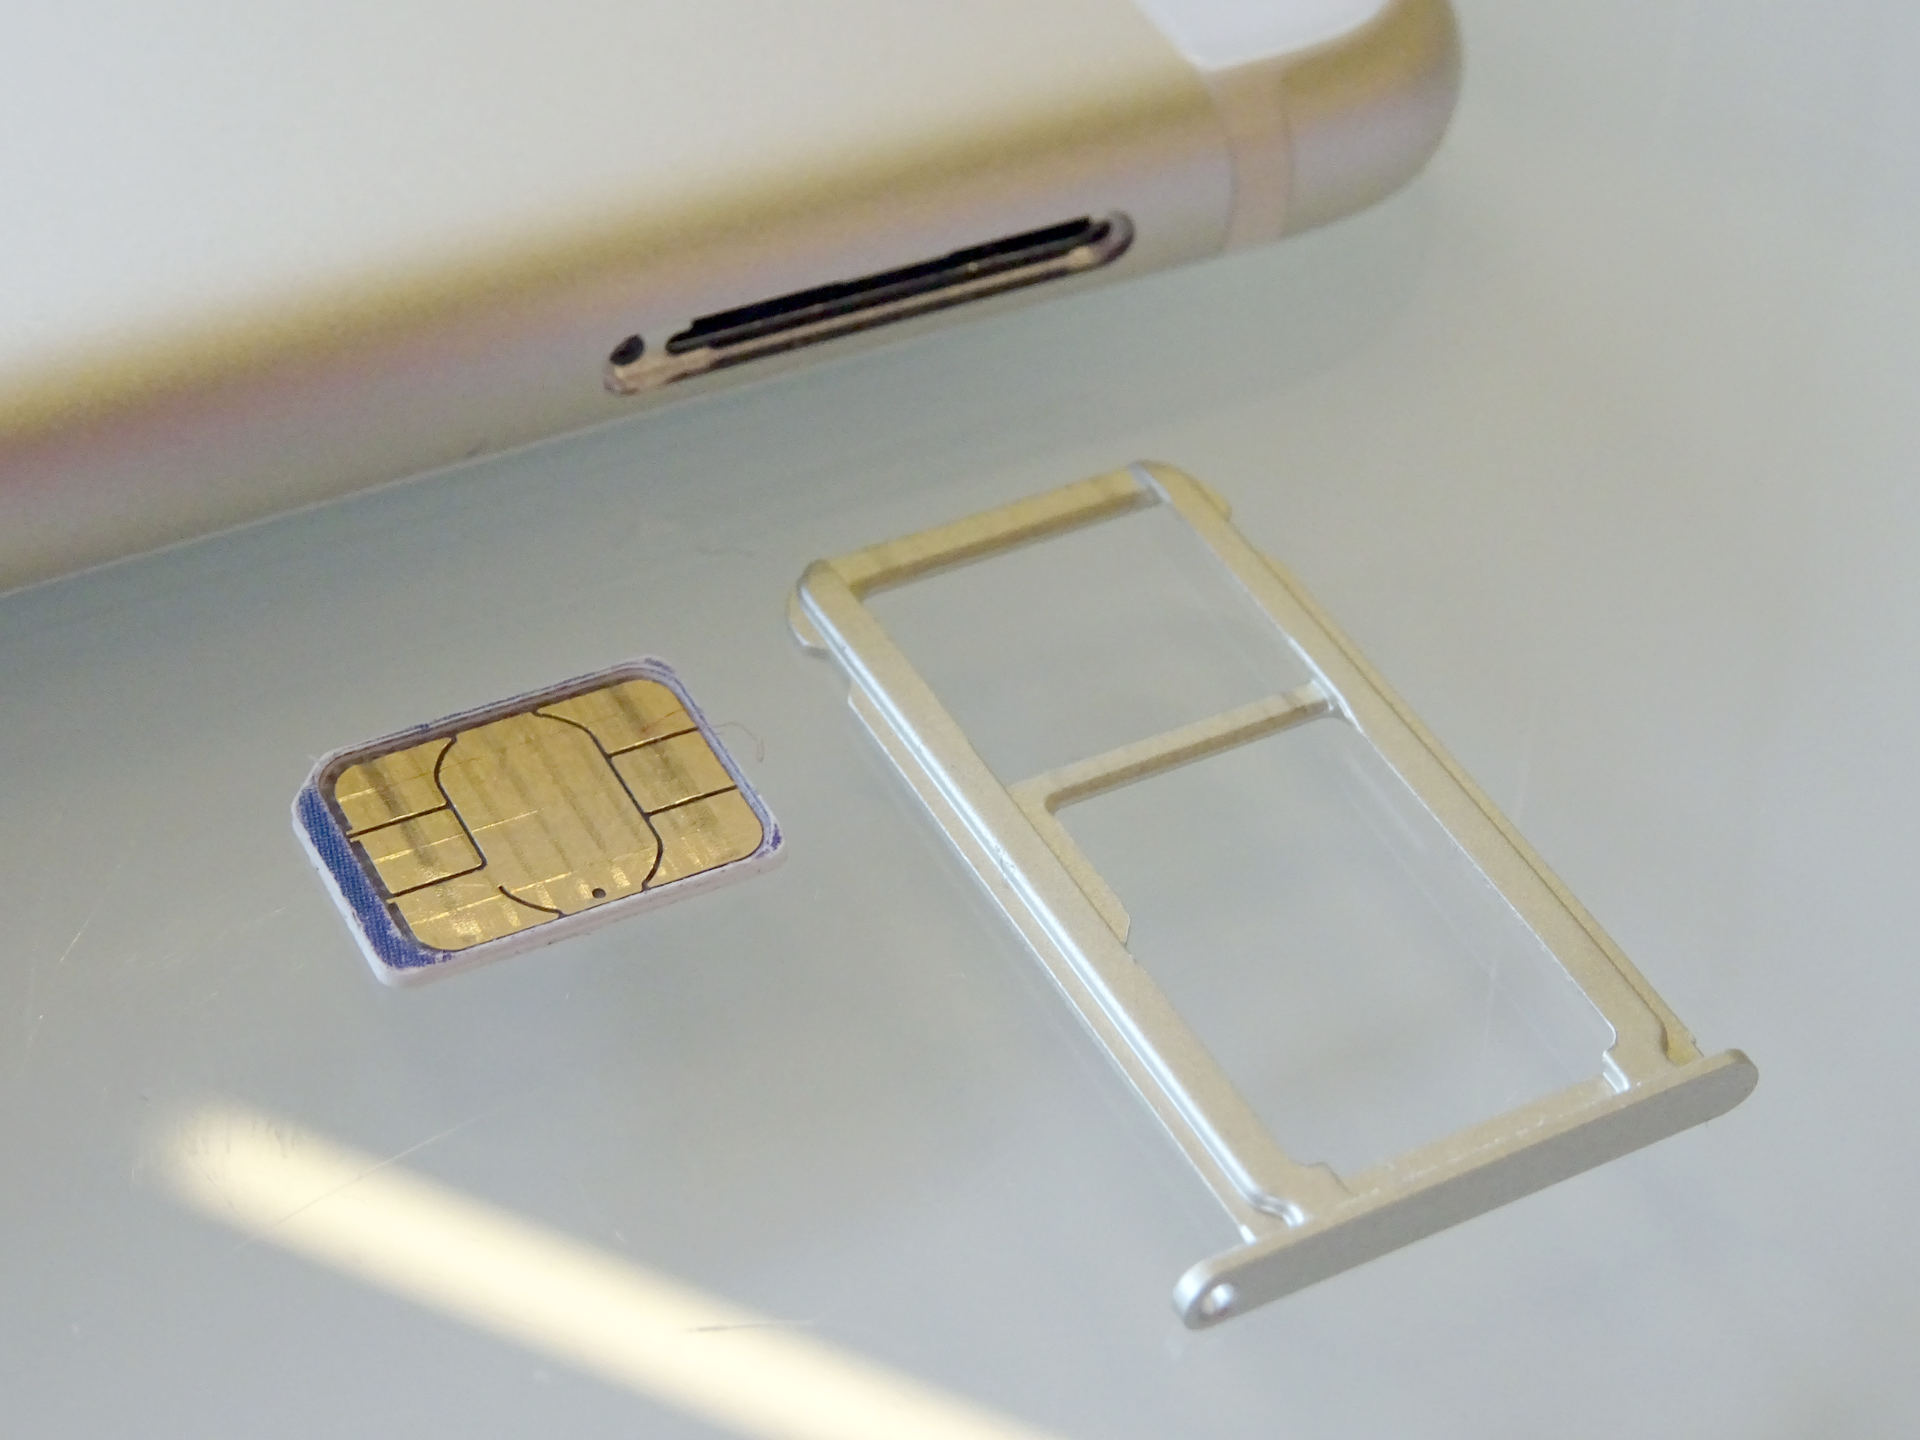 Huawei เตรียมเปิดตัวการ์ดความจำแบบใหม่อย่าง nanoSD คาด นำมาใช้กับ Mate 20 ราคาแรงกว่า microSD แบบเดิมๆ